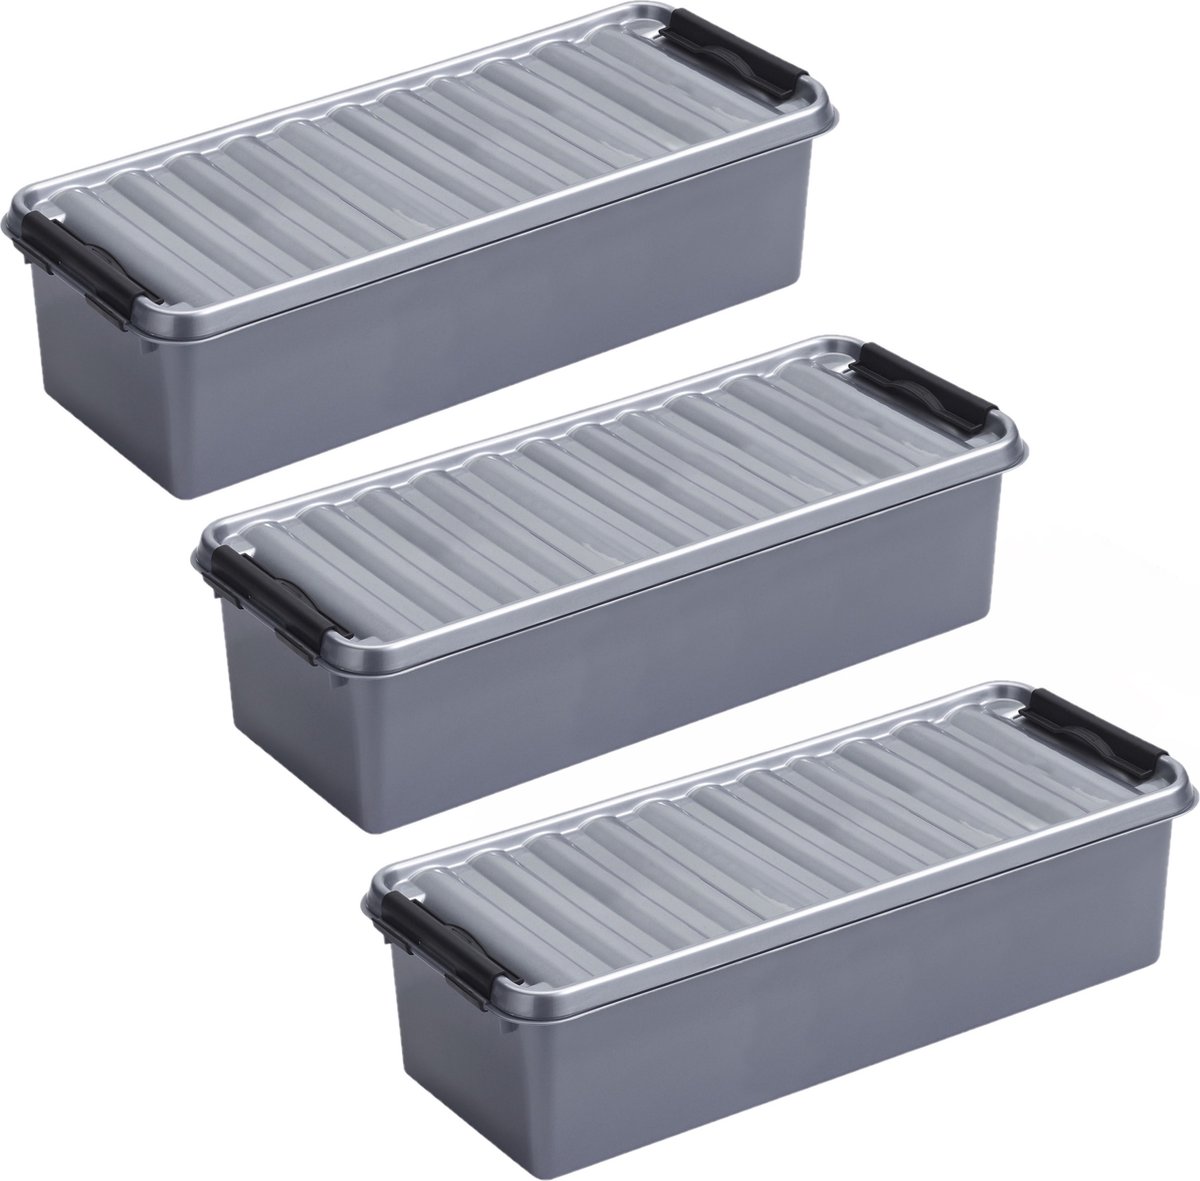 4x stuks opberg box/opbergdoos 3.5 liter 38.5 x 14 x 9.2 cm - Opslagbox - Opbergbak kunststof grijs/zwart